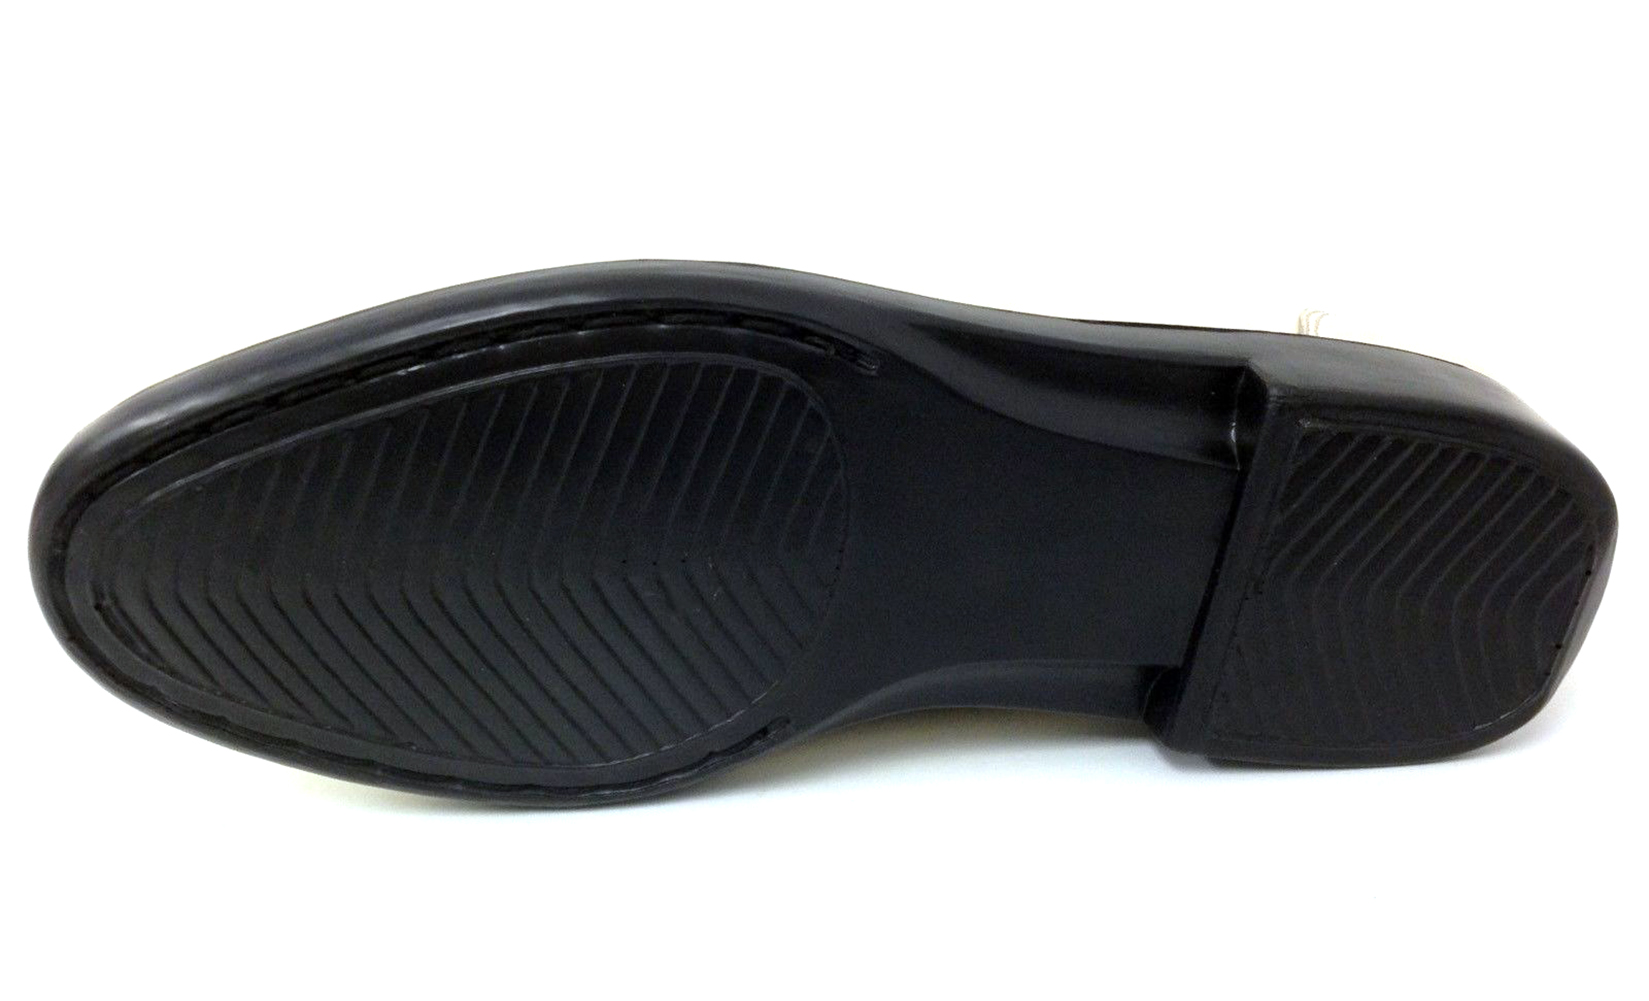 Men's Dress Loafers Leather Moc Toe Slip On Comfort Moccasin Shoes - image 3 of 3